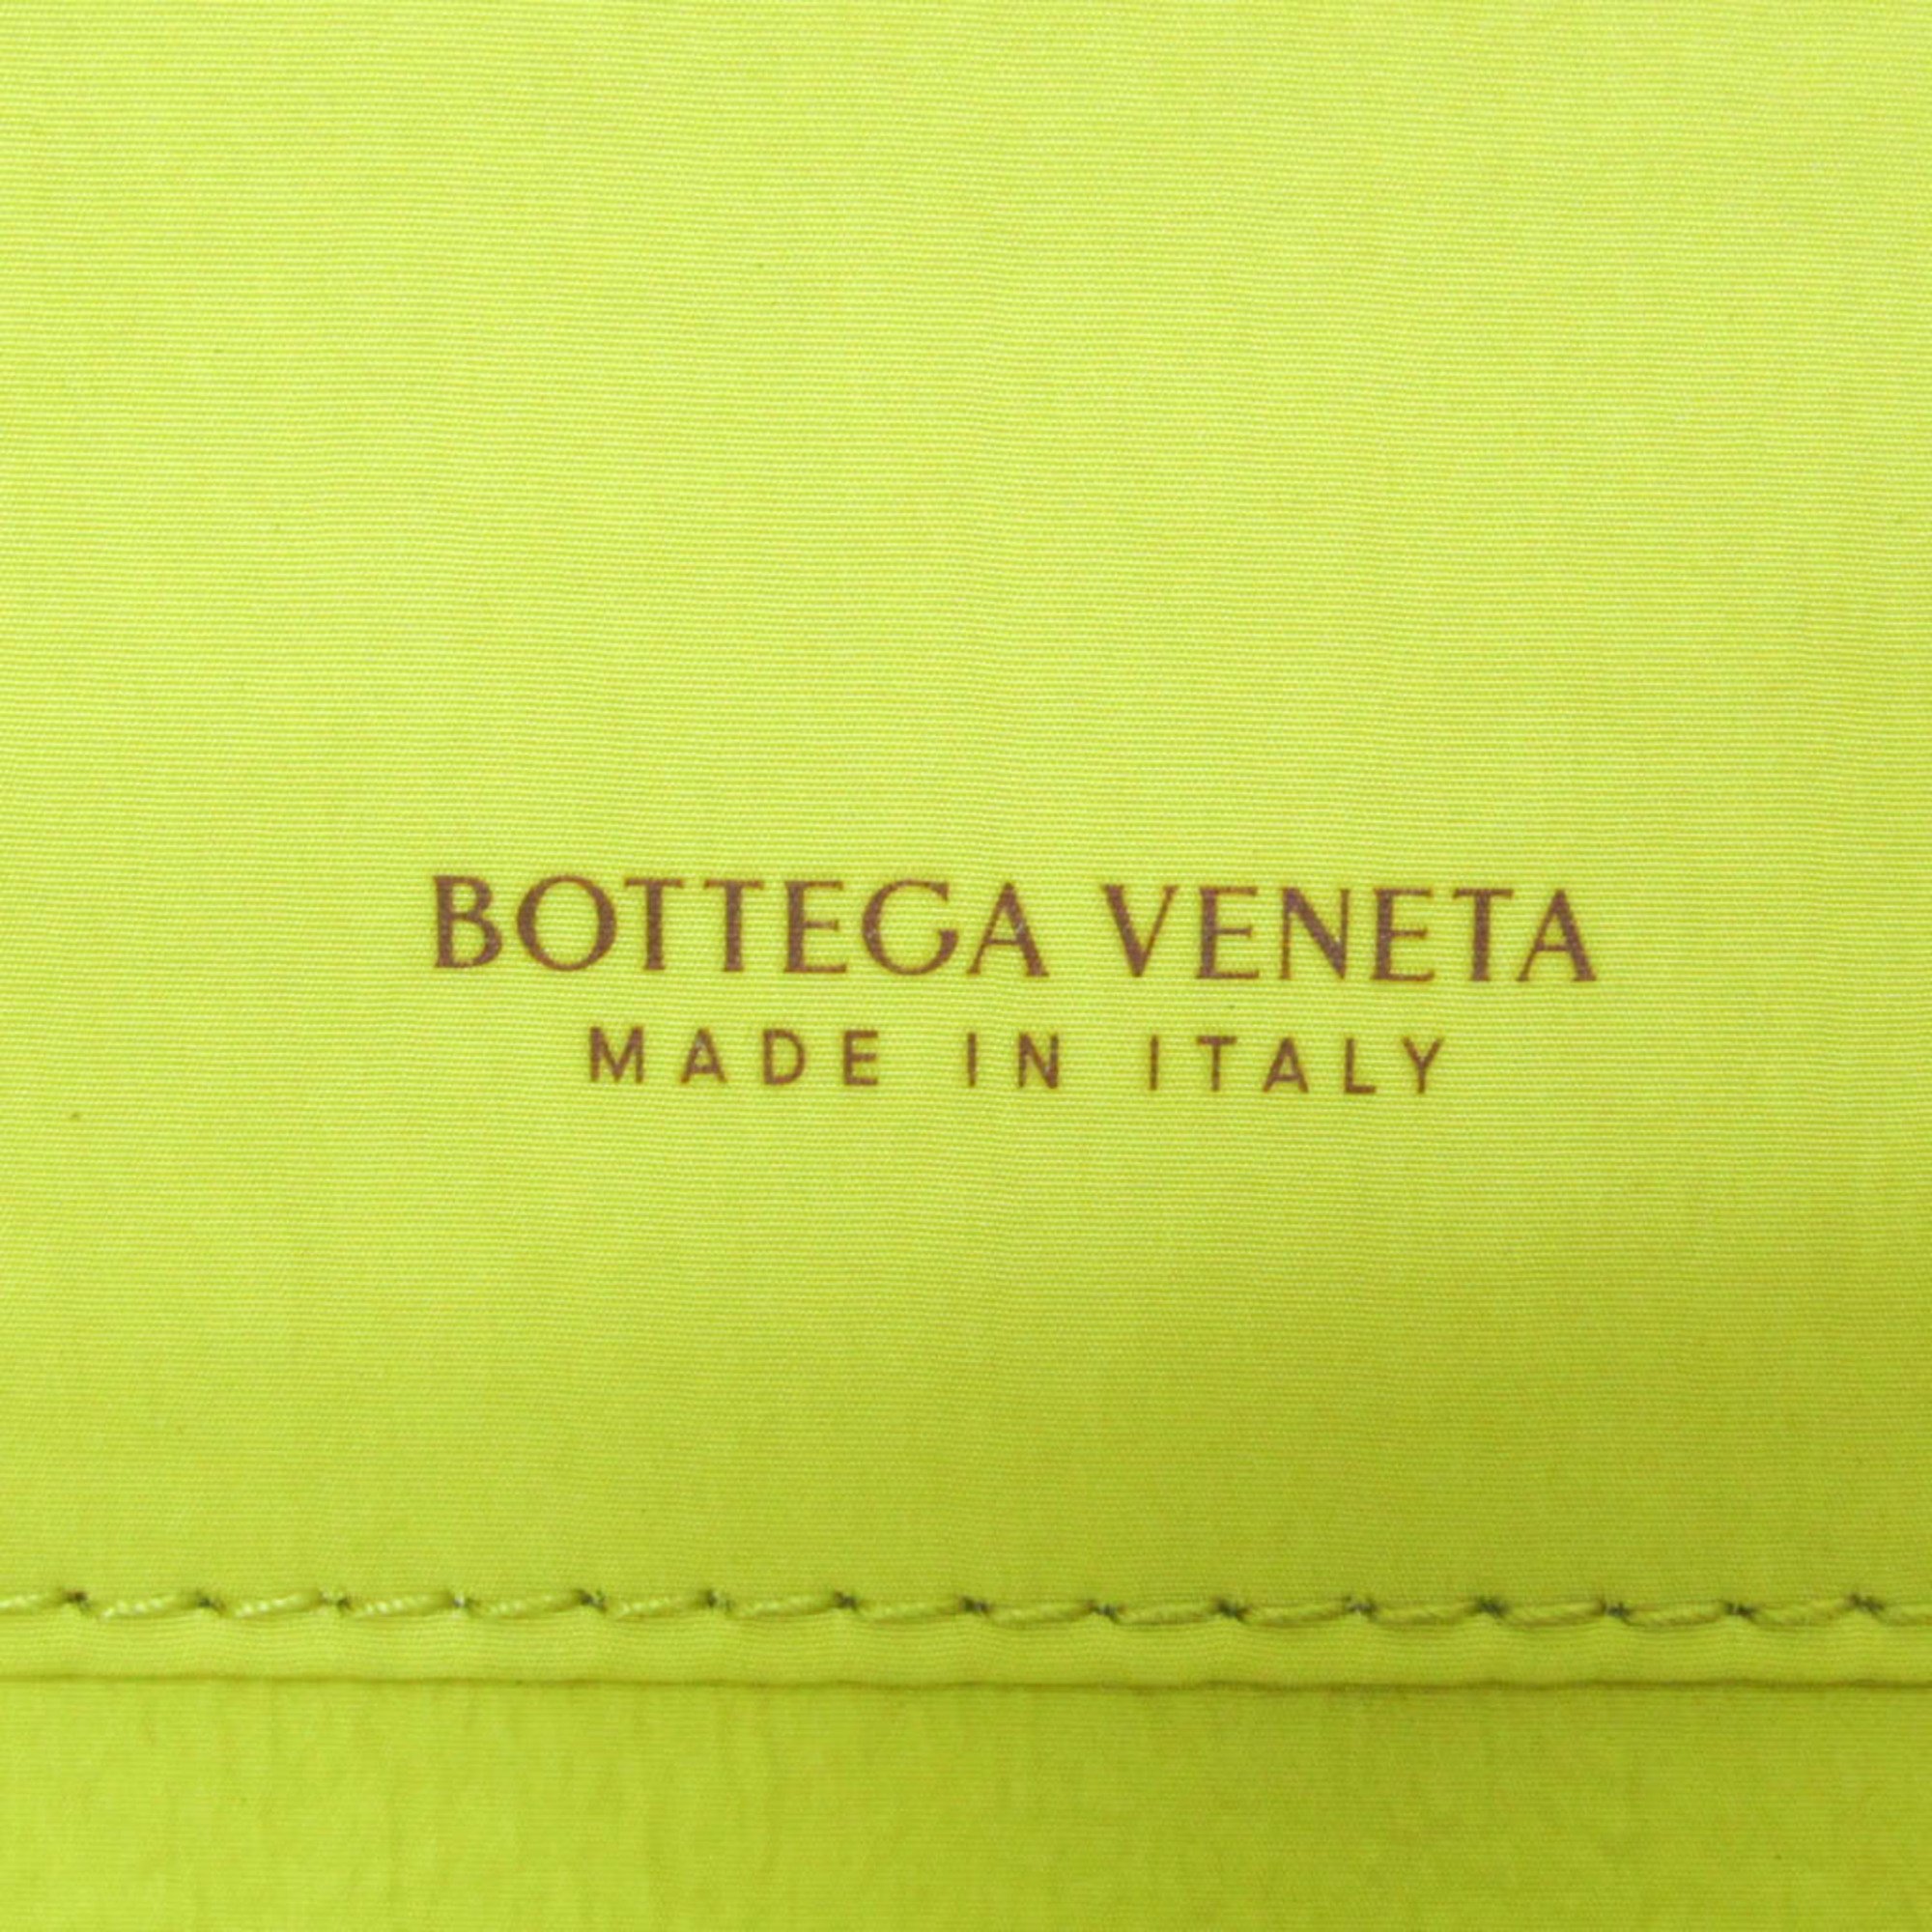 Bottega Veneta 666771 Women's Leather Clutch Bag,Pouch Yellow